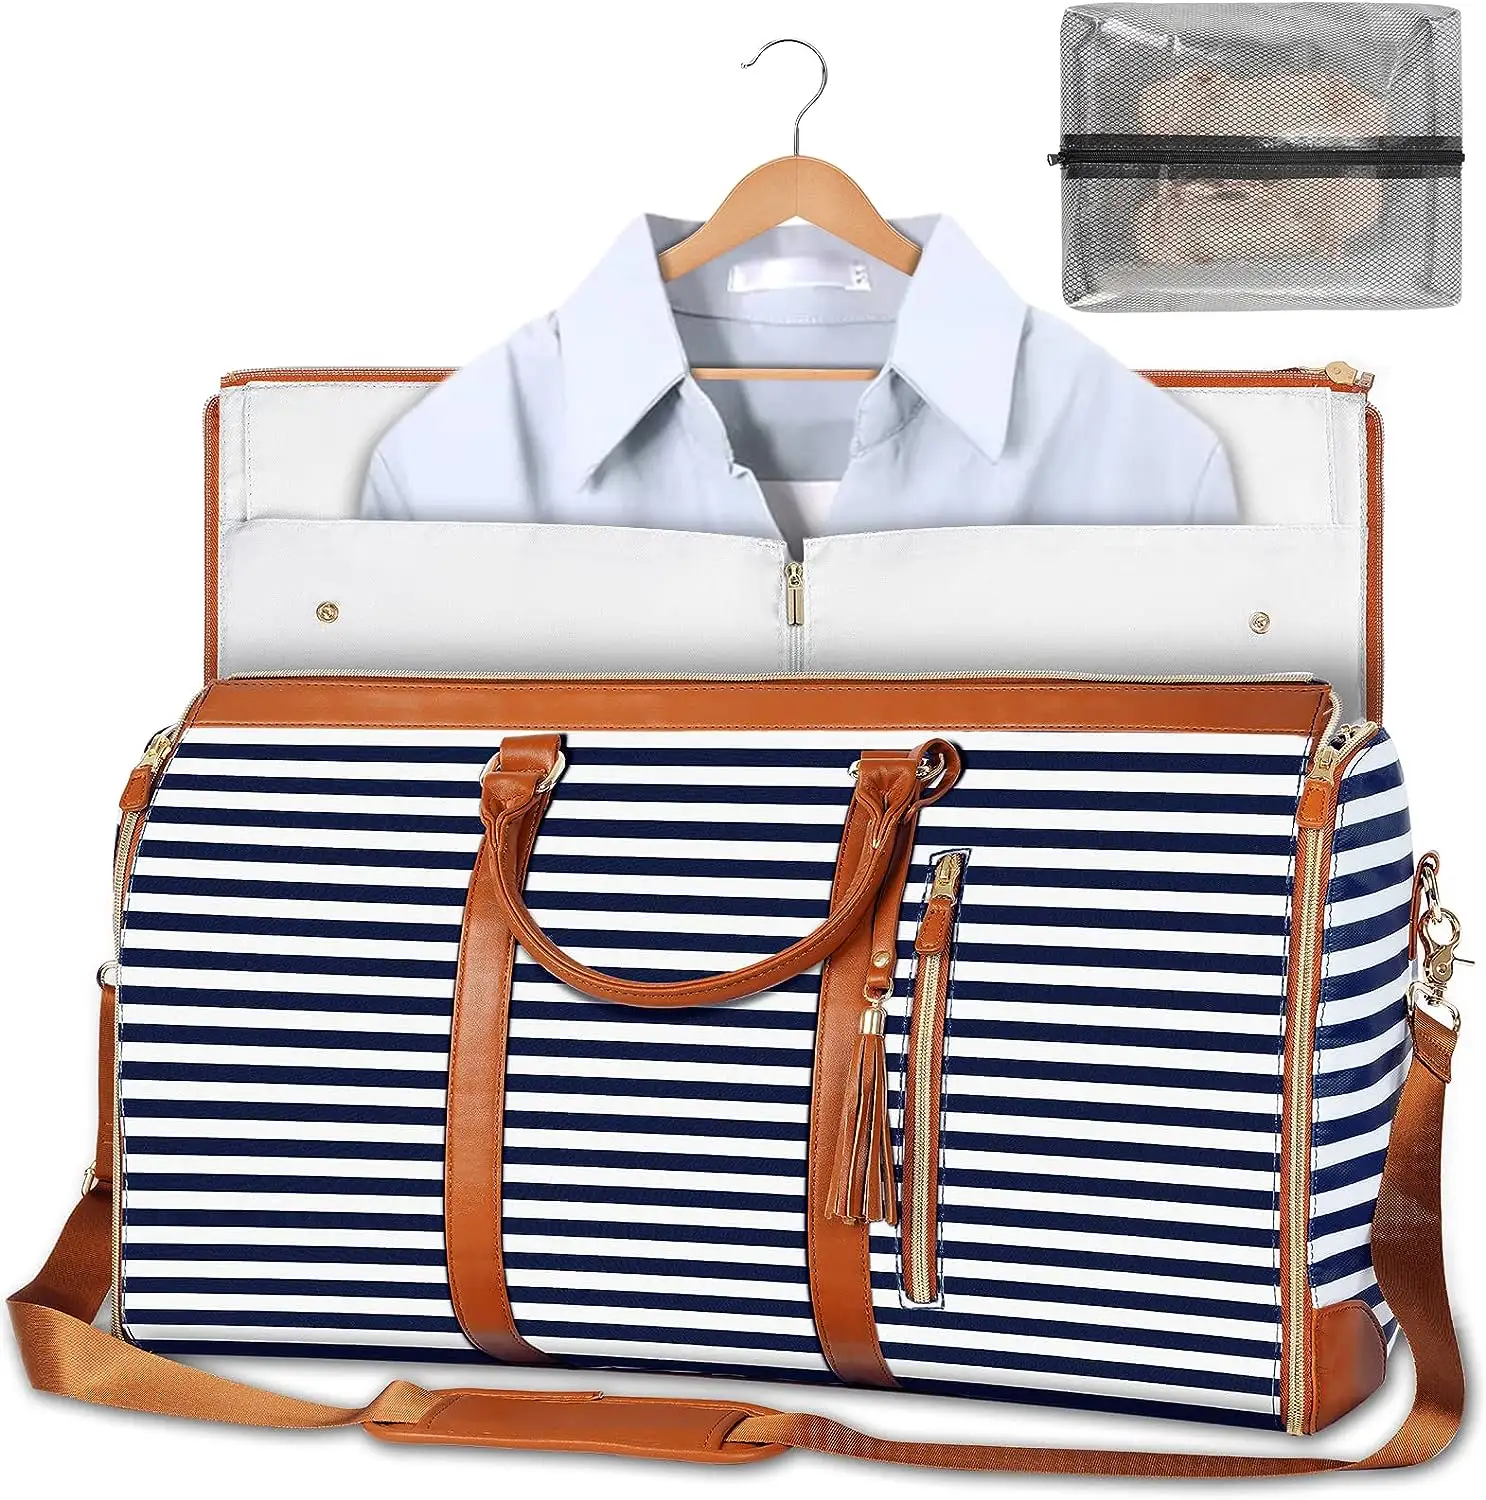 Bolsa seca de viaje de cuero PU impermeable 2 en 1 con una bolsa separada para ropa húmeda o sucia, bolsa organizadora de viaje plegable Nova